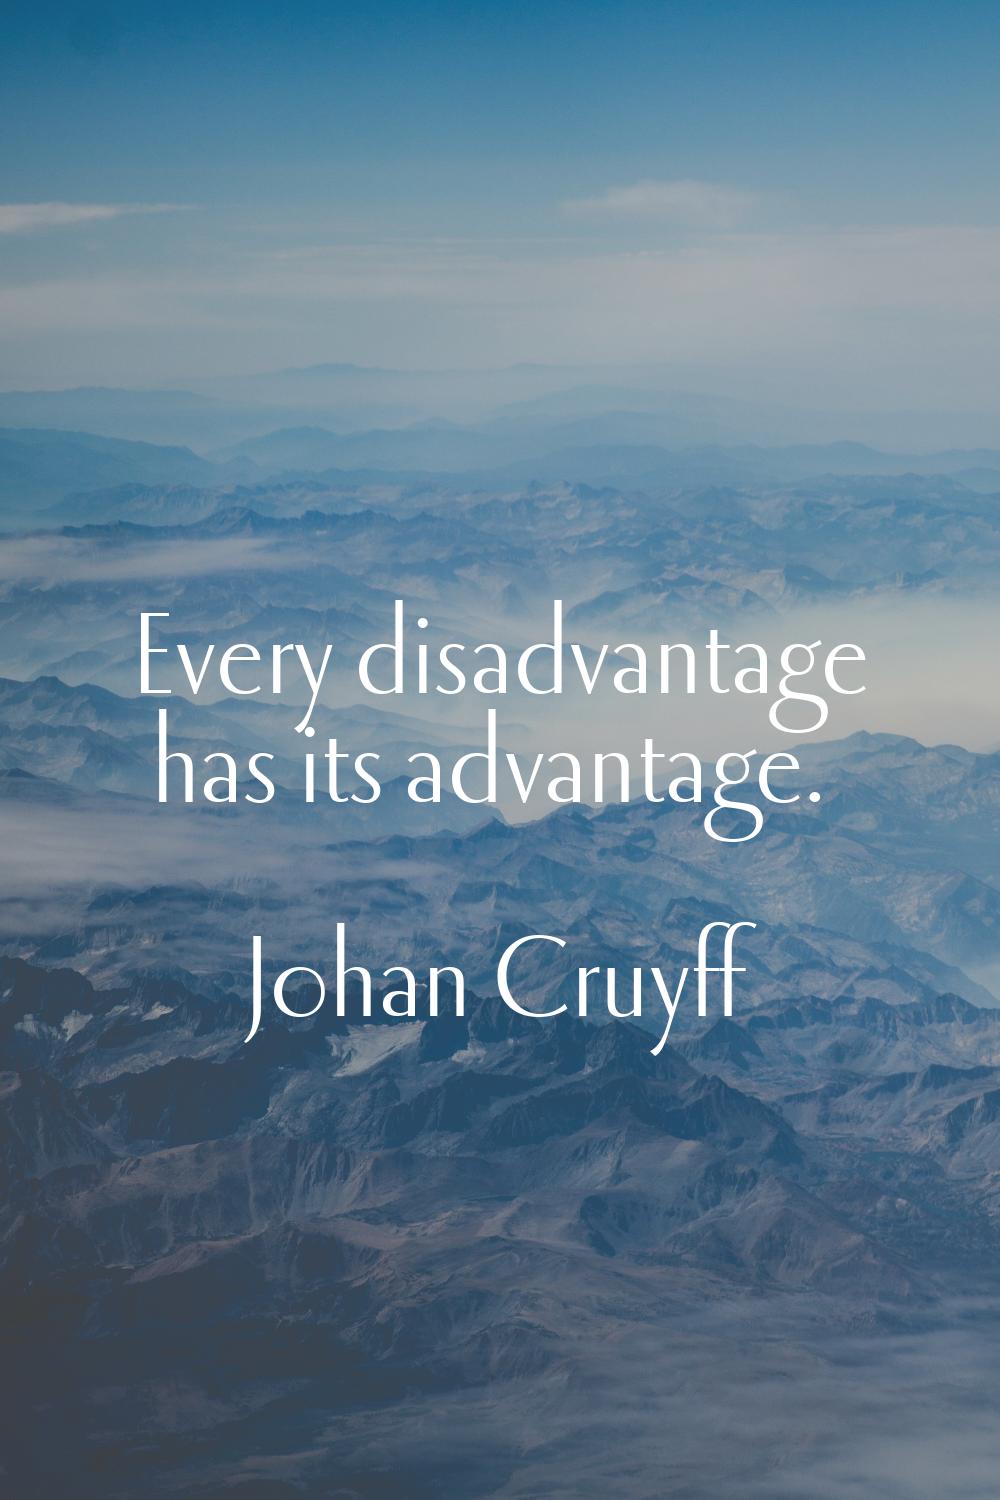 Every disadvantage has its advantage.